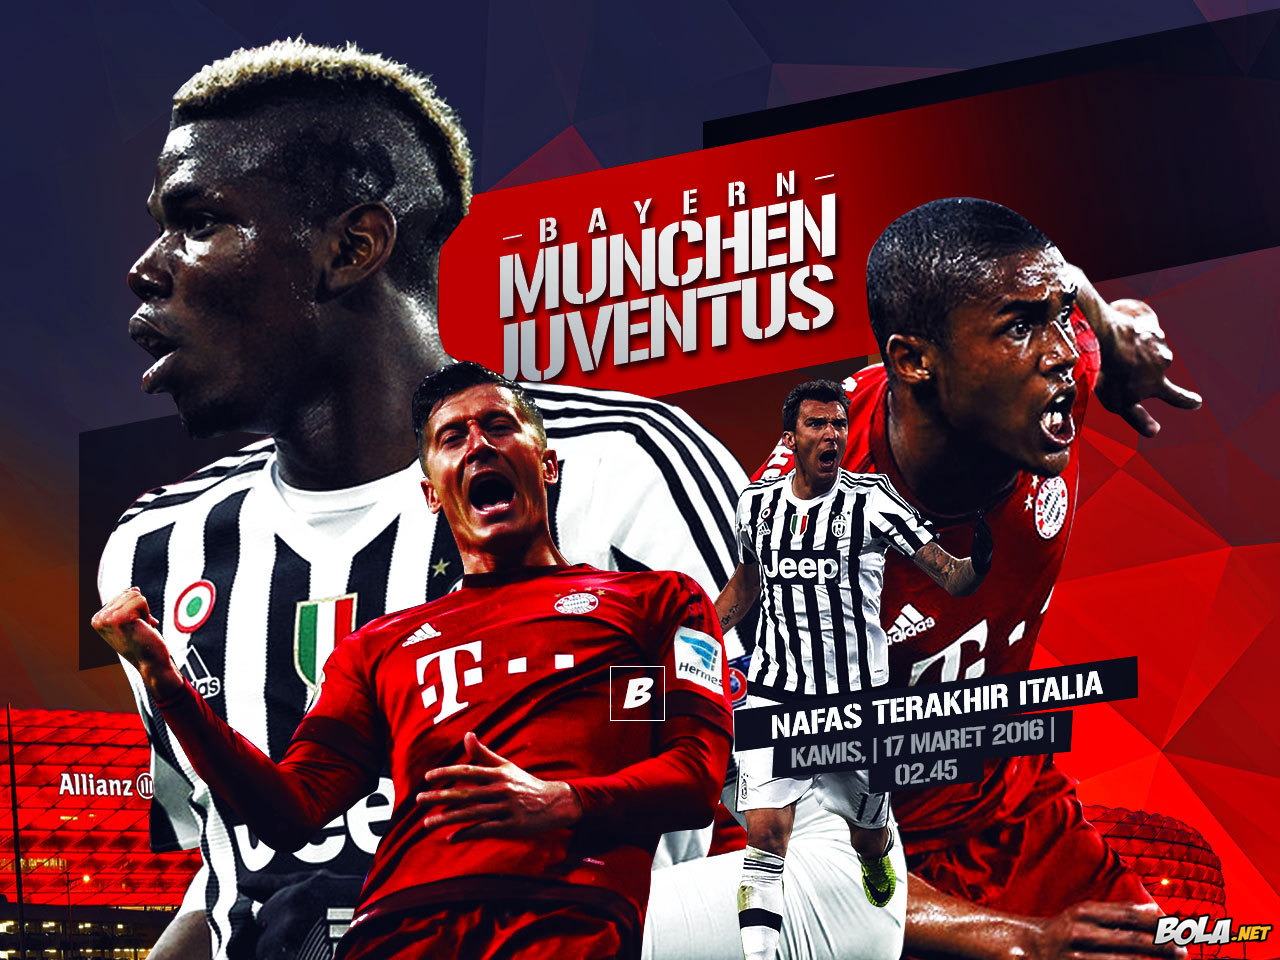 Deskripsi : Wallpaper Bayern Munchen Vs Juventus, size: 1280x960